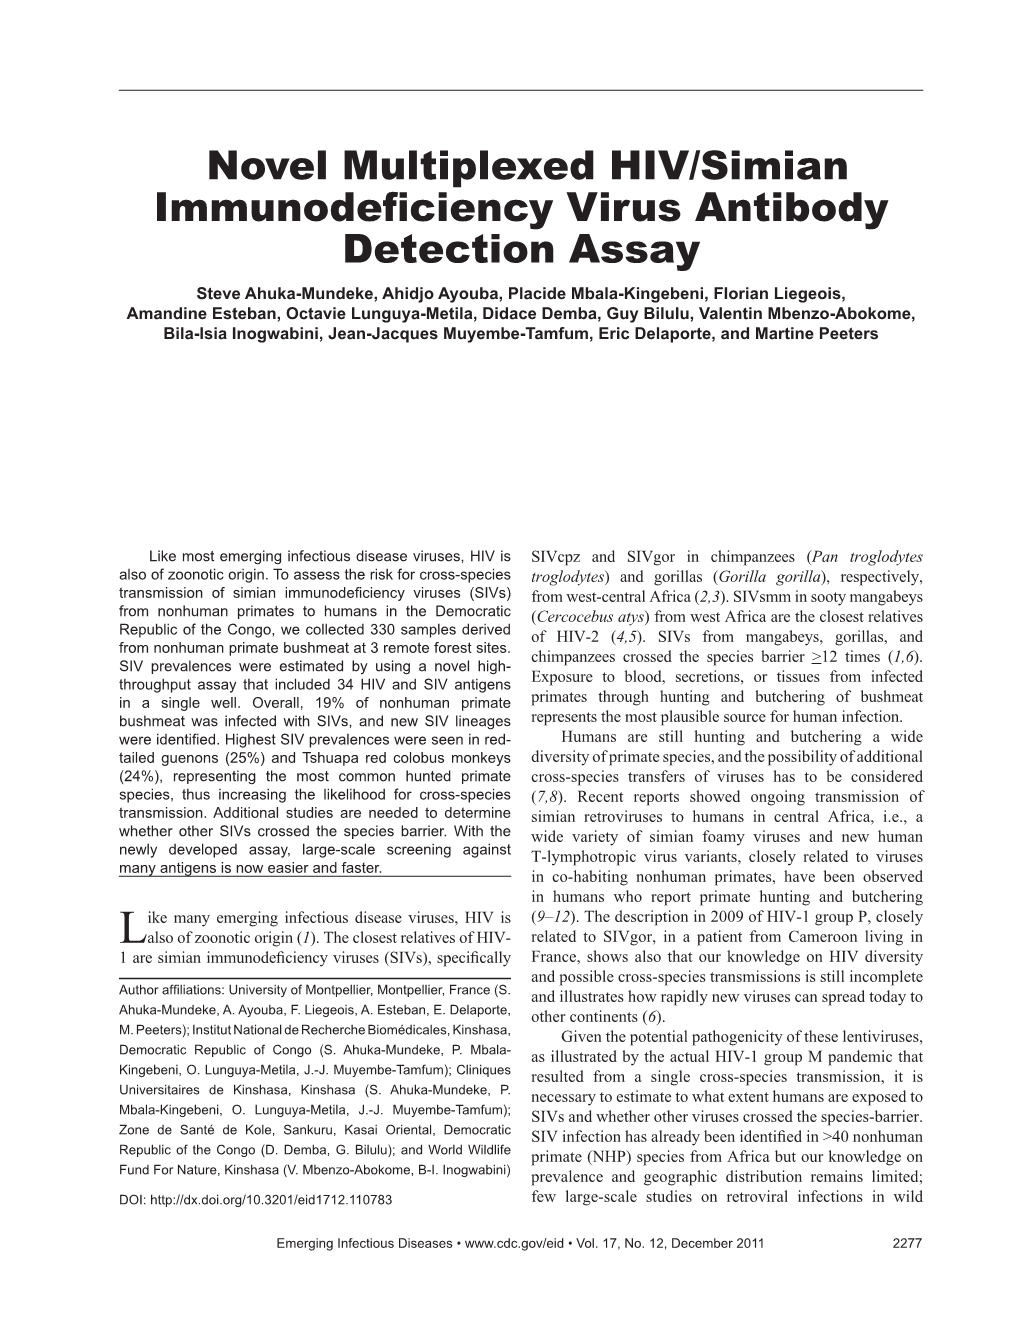 Novel Multiplexed HIV/Simian Immunodeficiency Virus Antibody